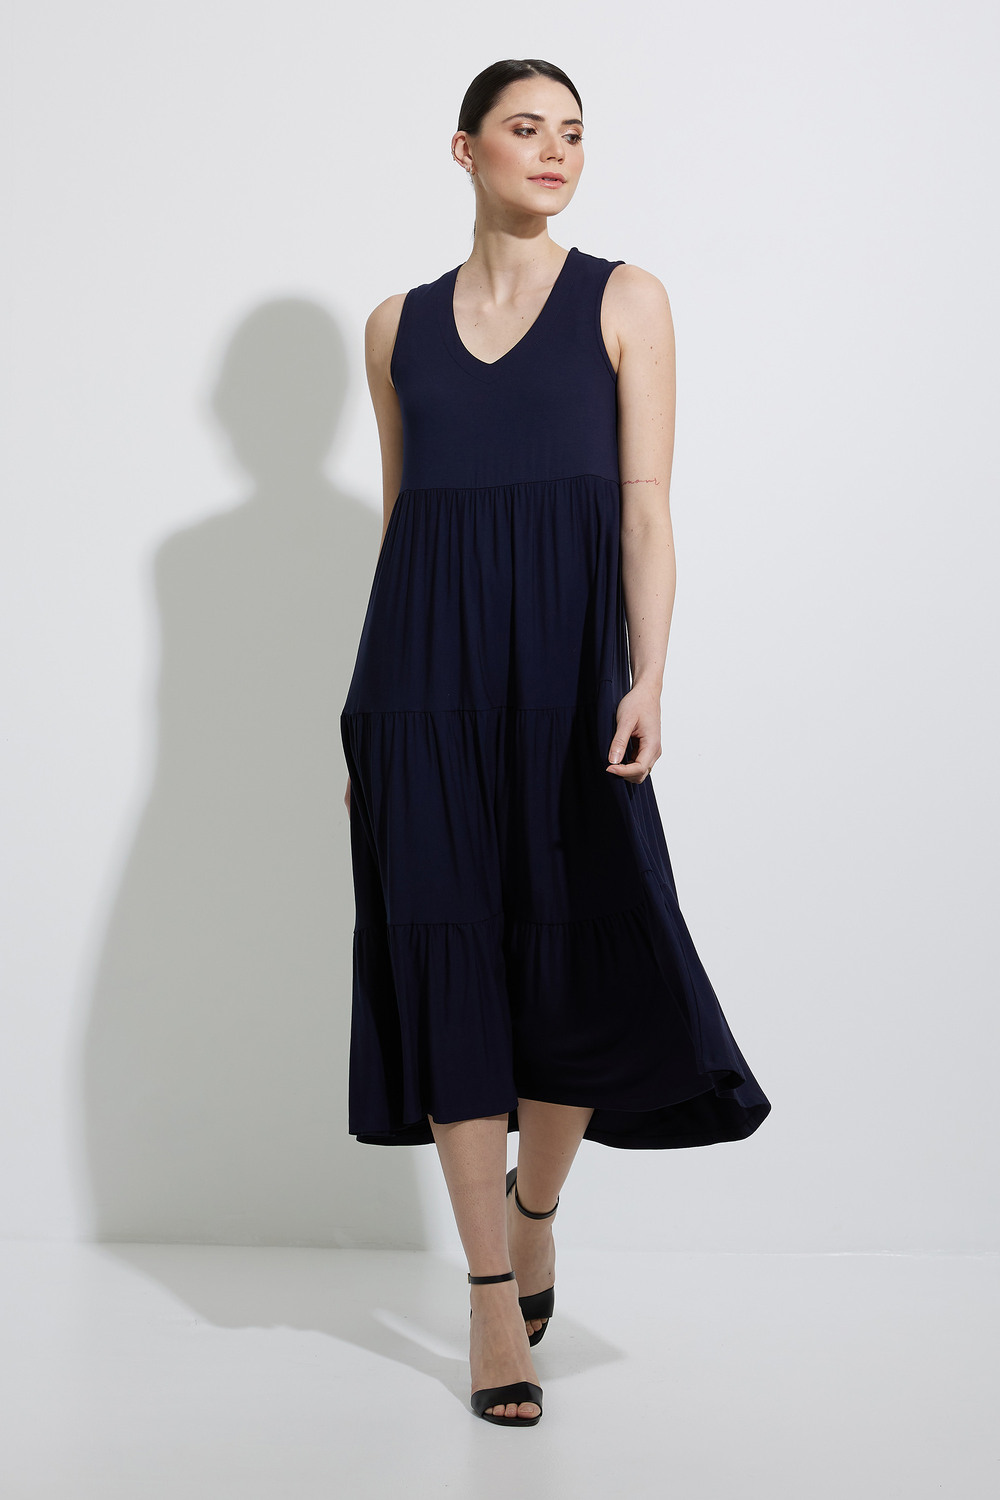 Joseph Ribkoff Tiered Dress Style 222213. Midnight Blue